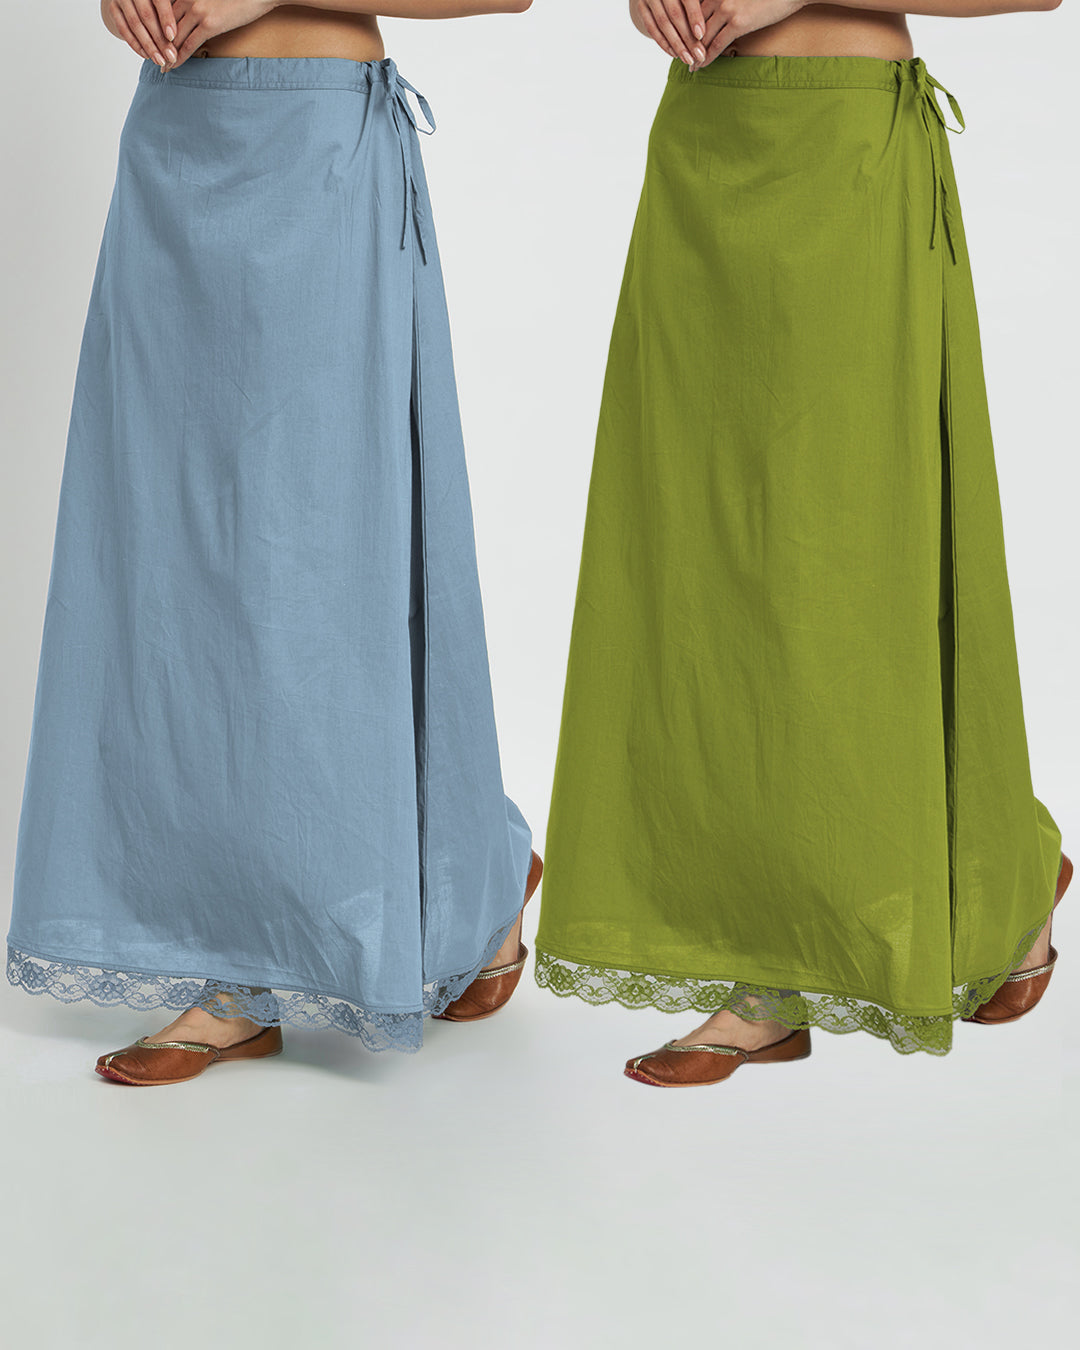 Combo: Blue Dawn & Sage Green Lace Medley Peekaboo Petticoat- Set of 2